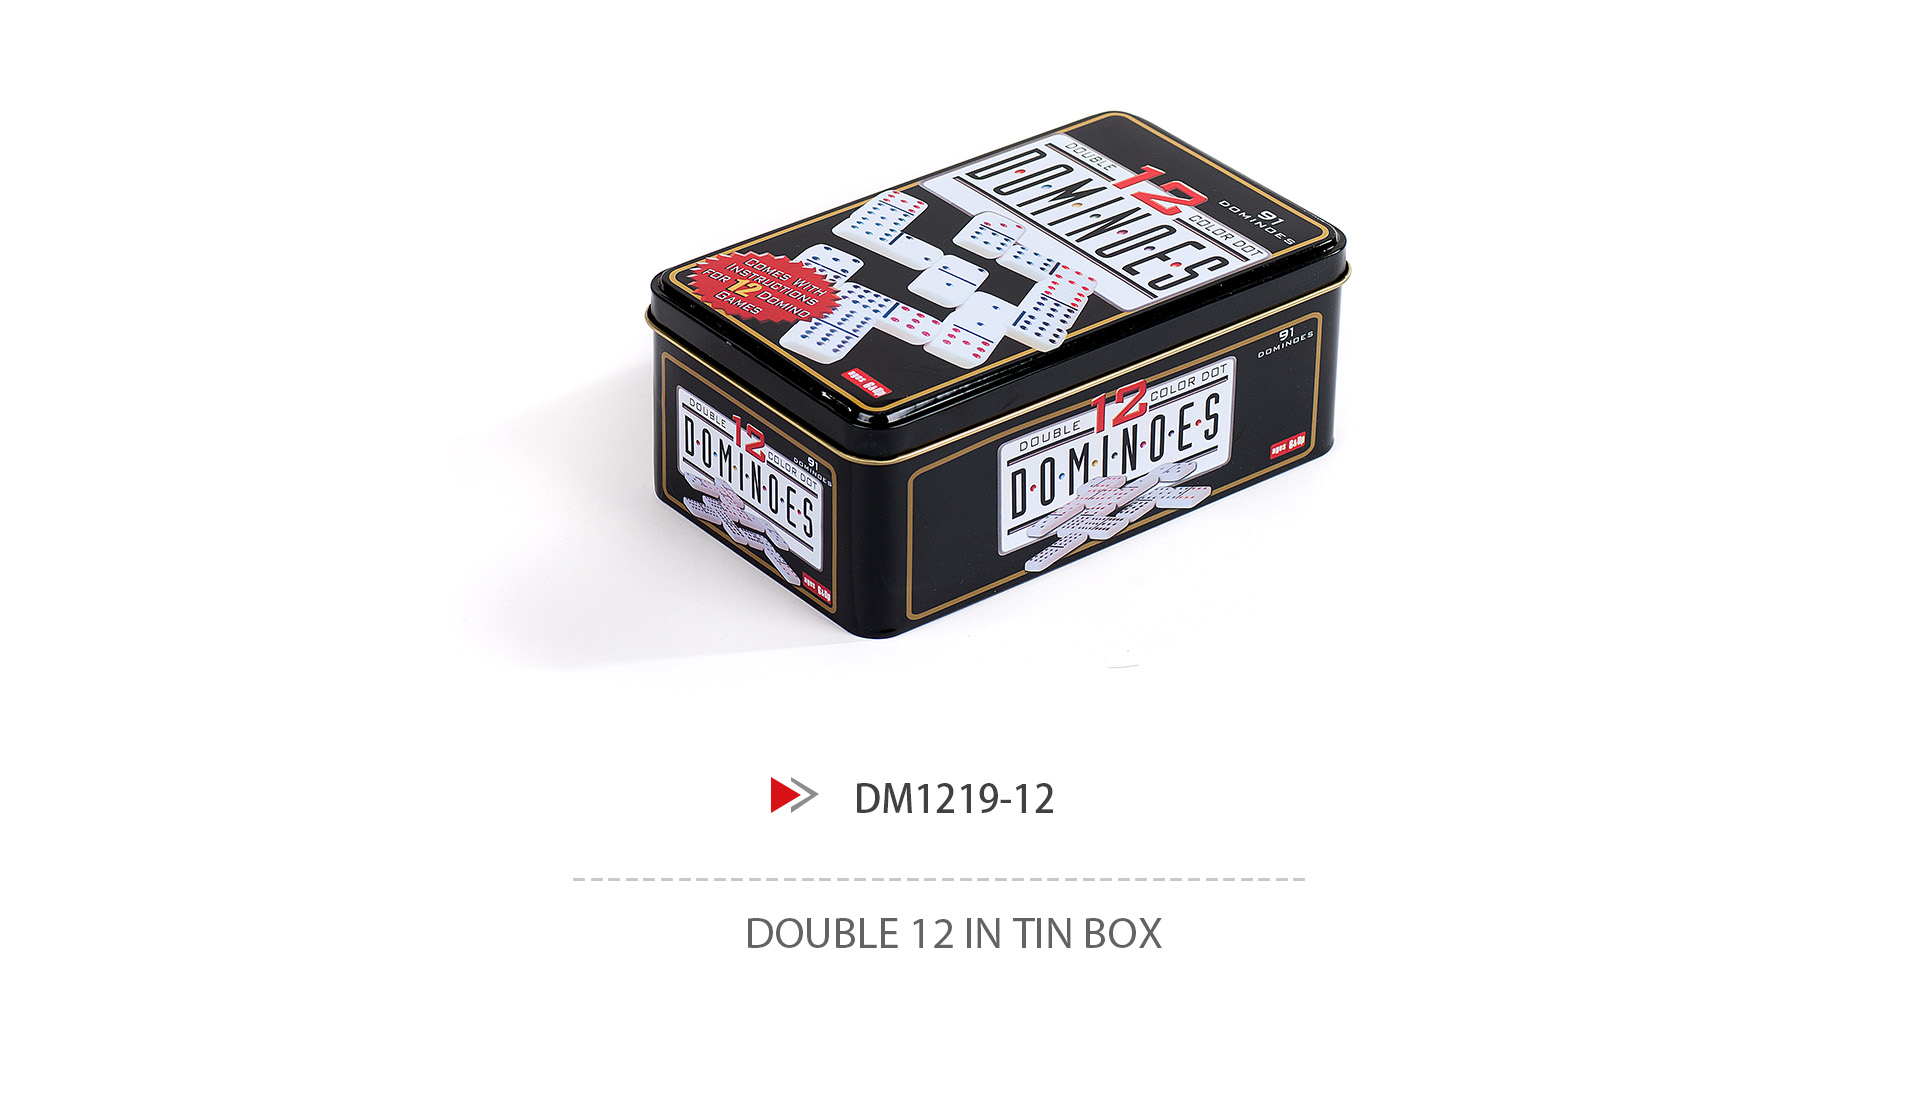 DM1219-12 DOUBLE 12 IN TIN BOX